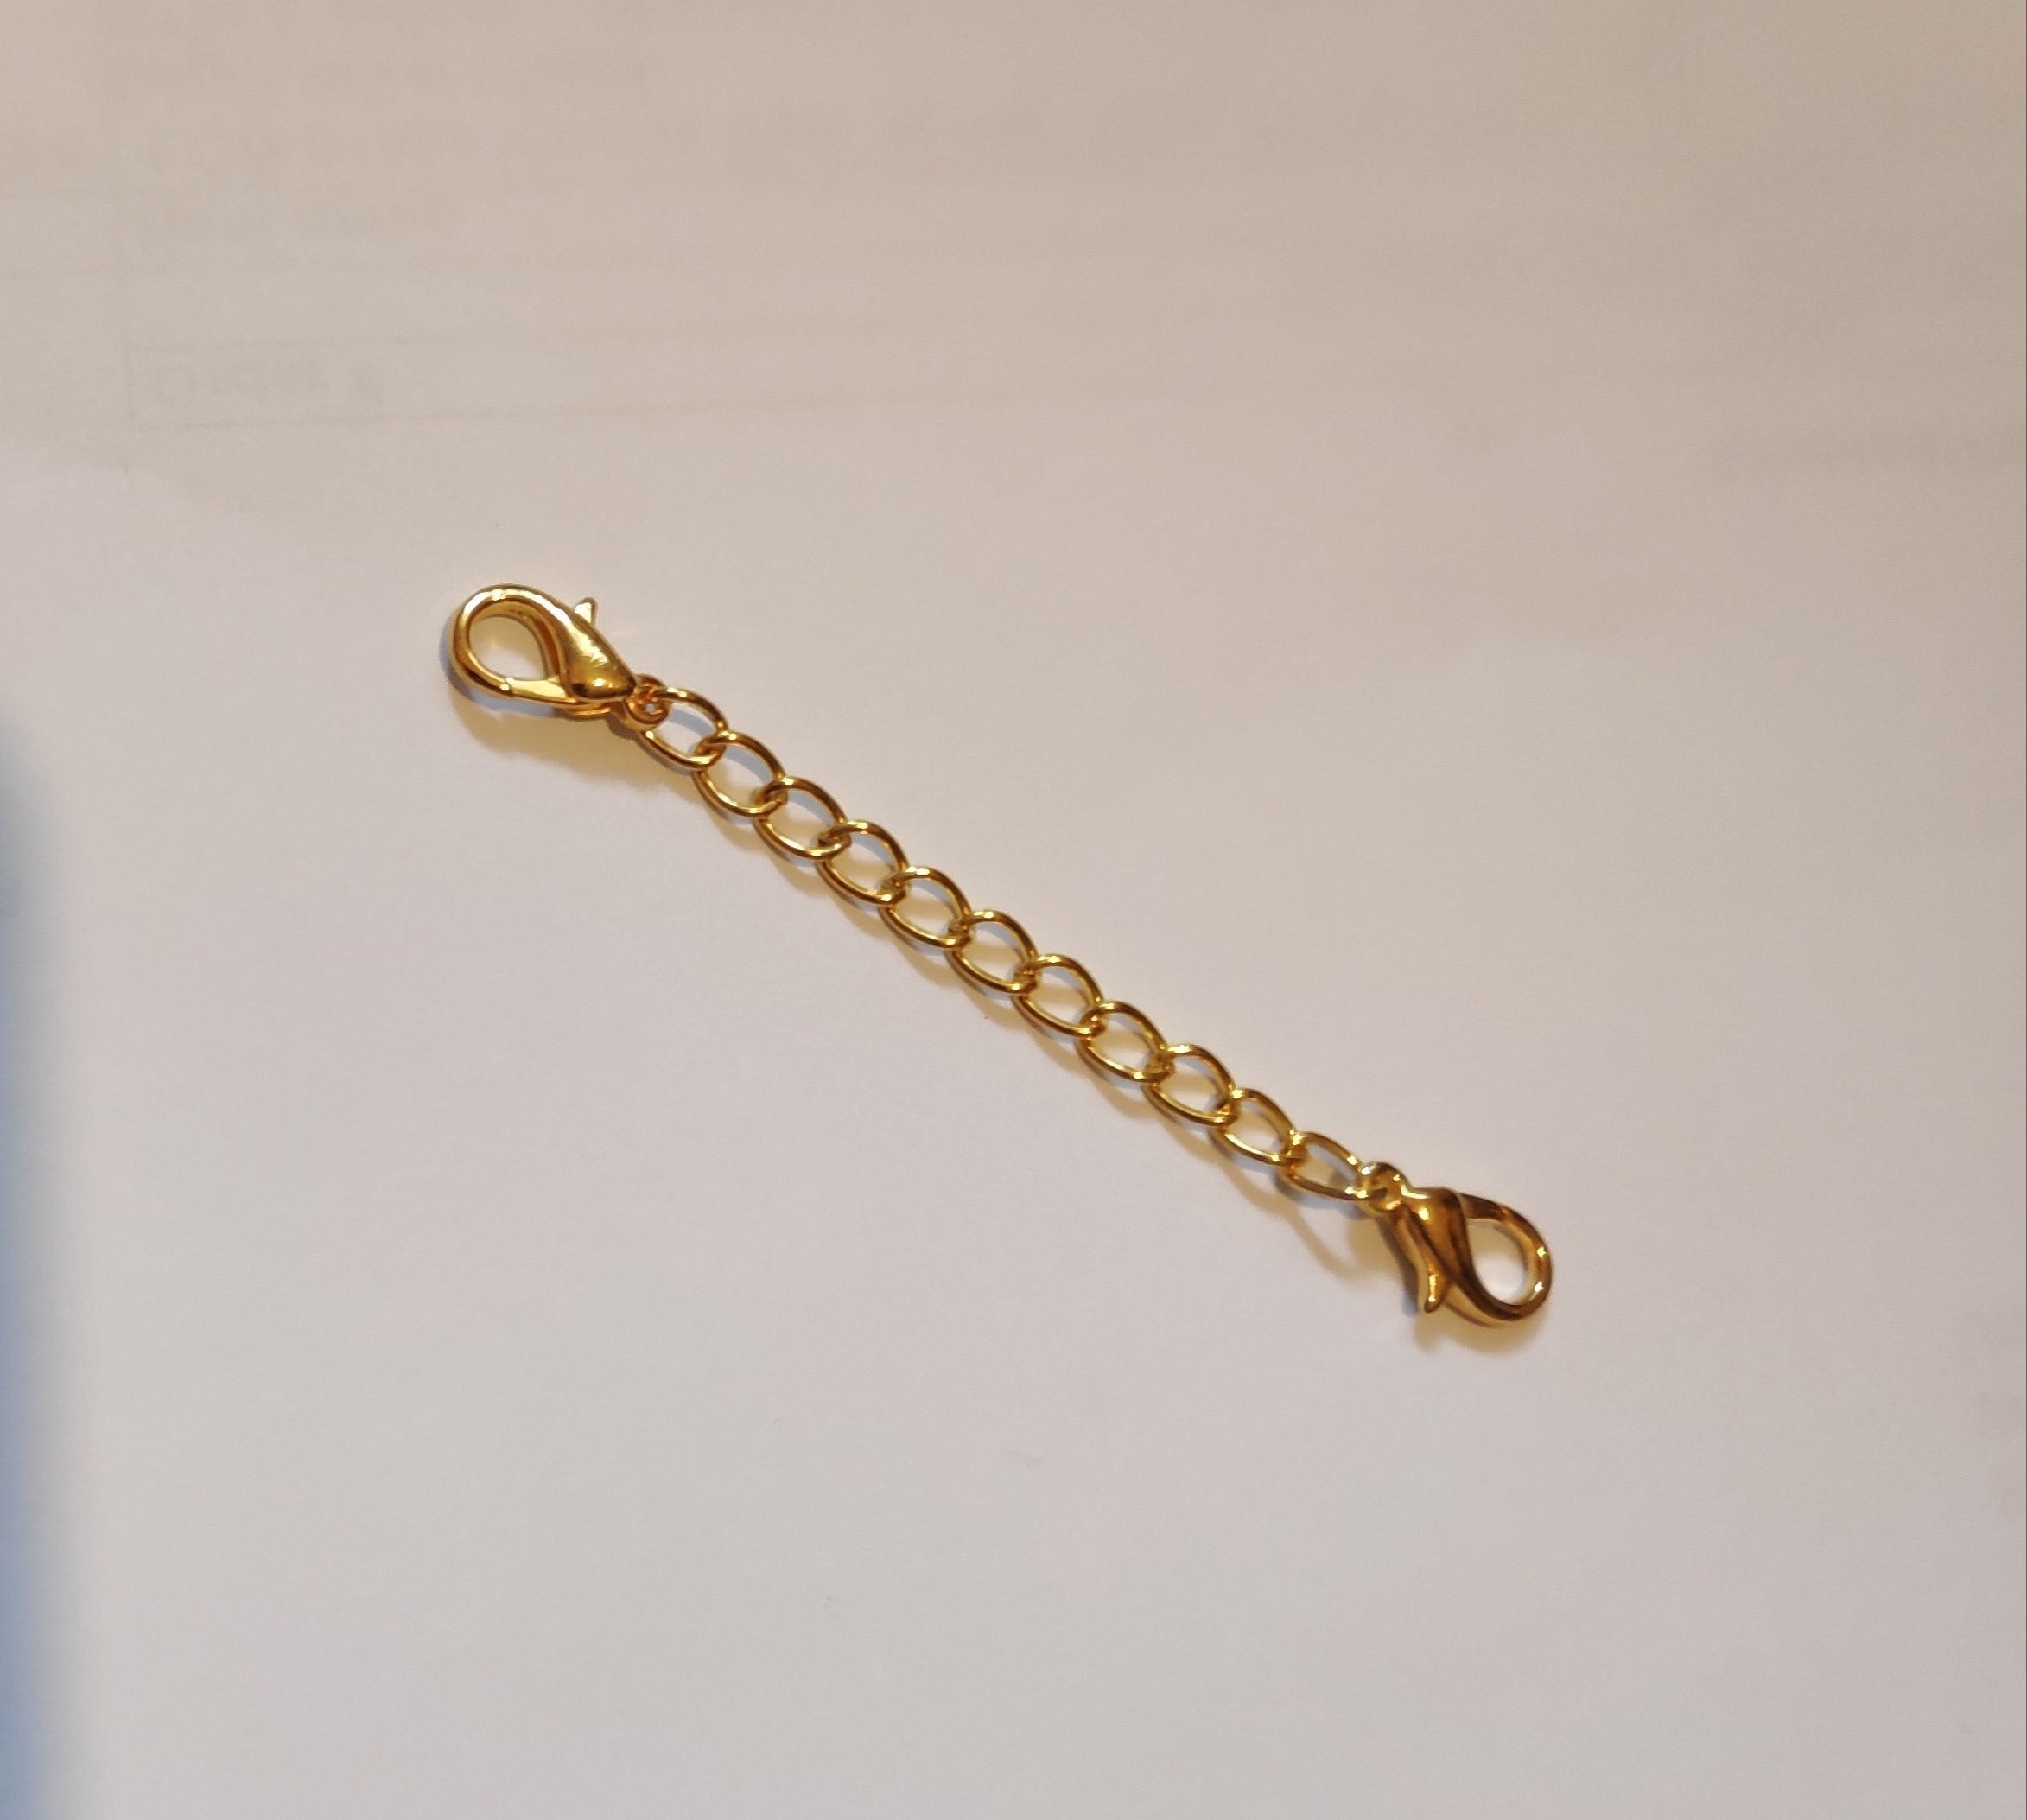 Adjustable Necklace Extender 14K or 18K Real Gold, Removable Chain Extender,  Real Solid Gold Extension Chain Link,1-4 Inch Bracelet Extender 